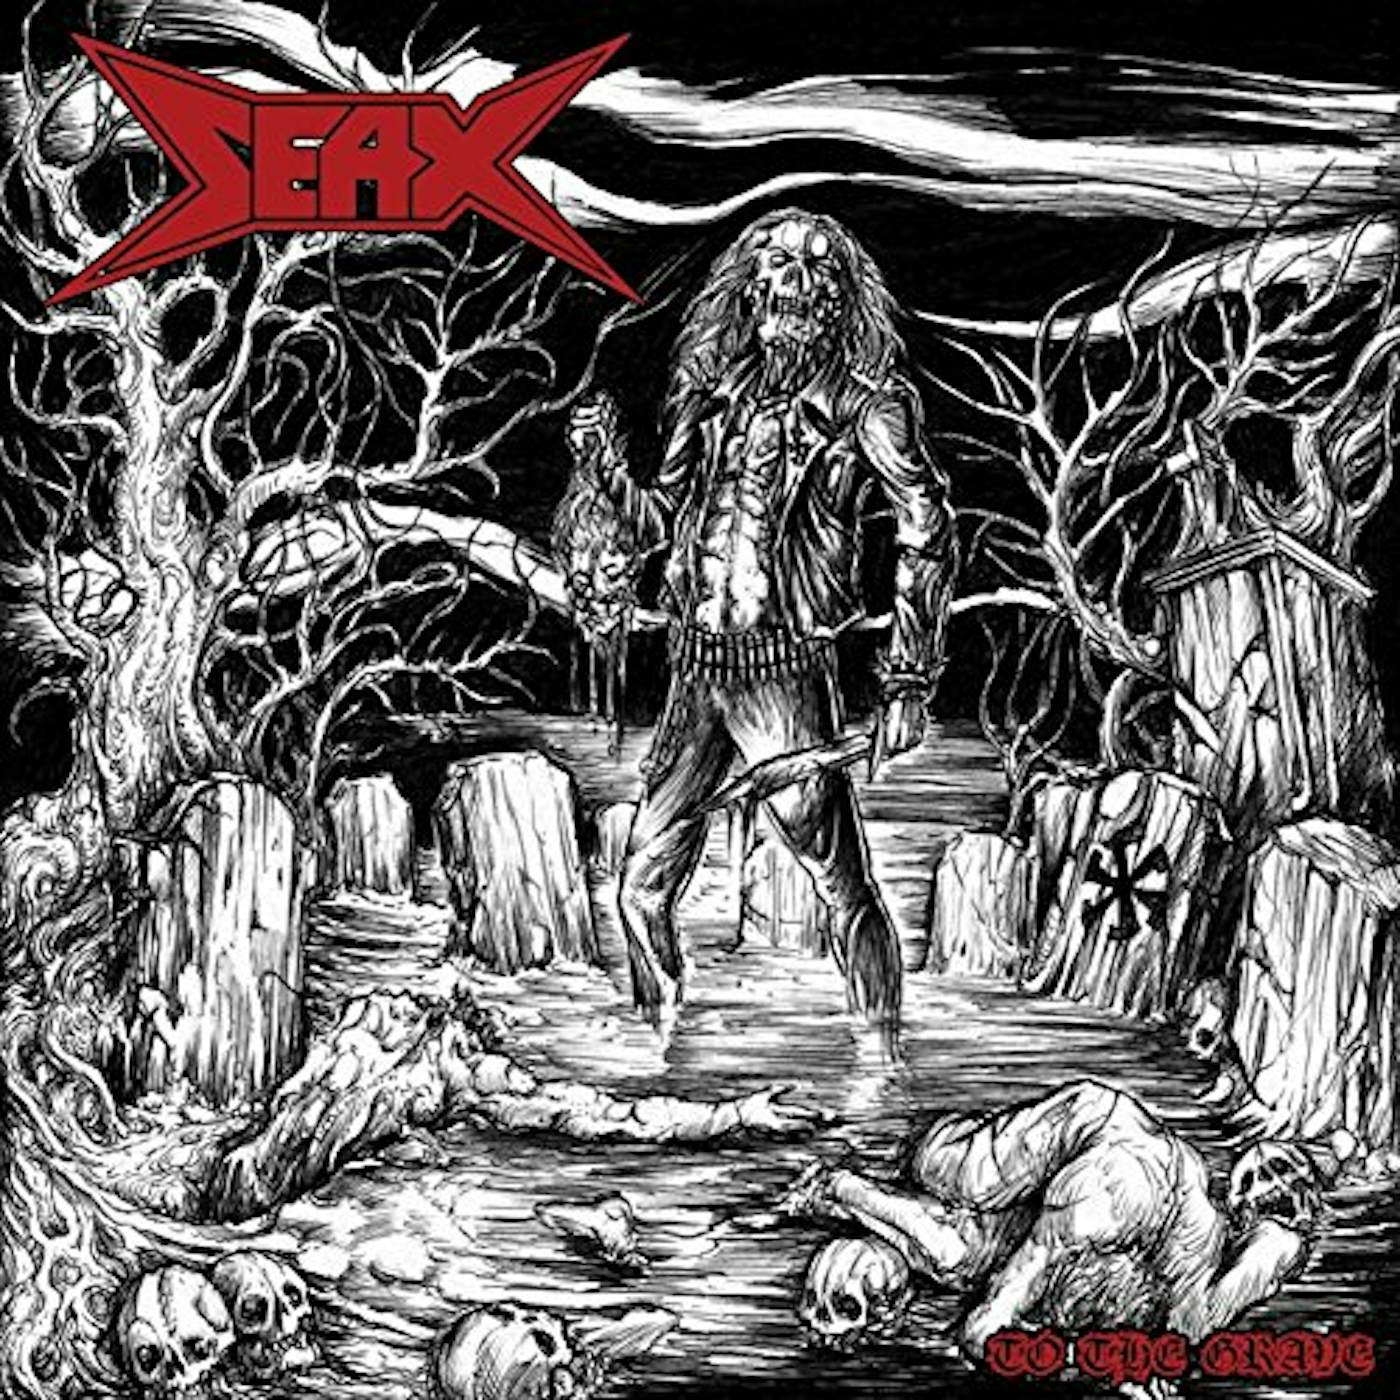 Seax To The Grave Vinyl Record